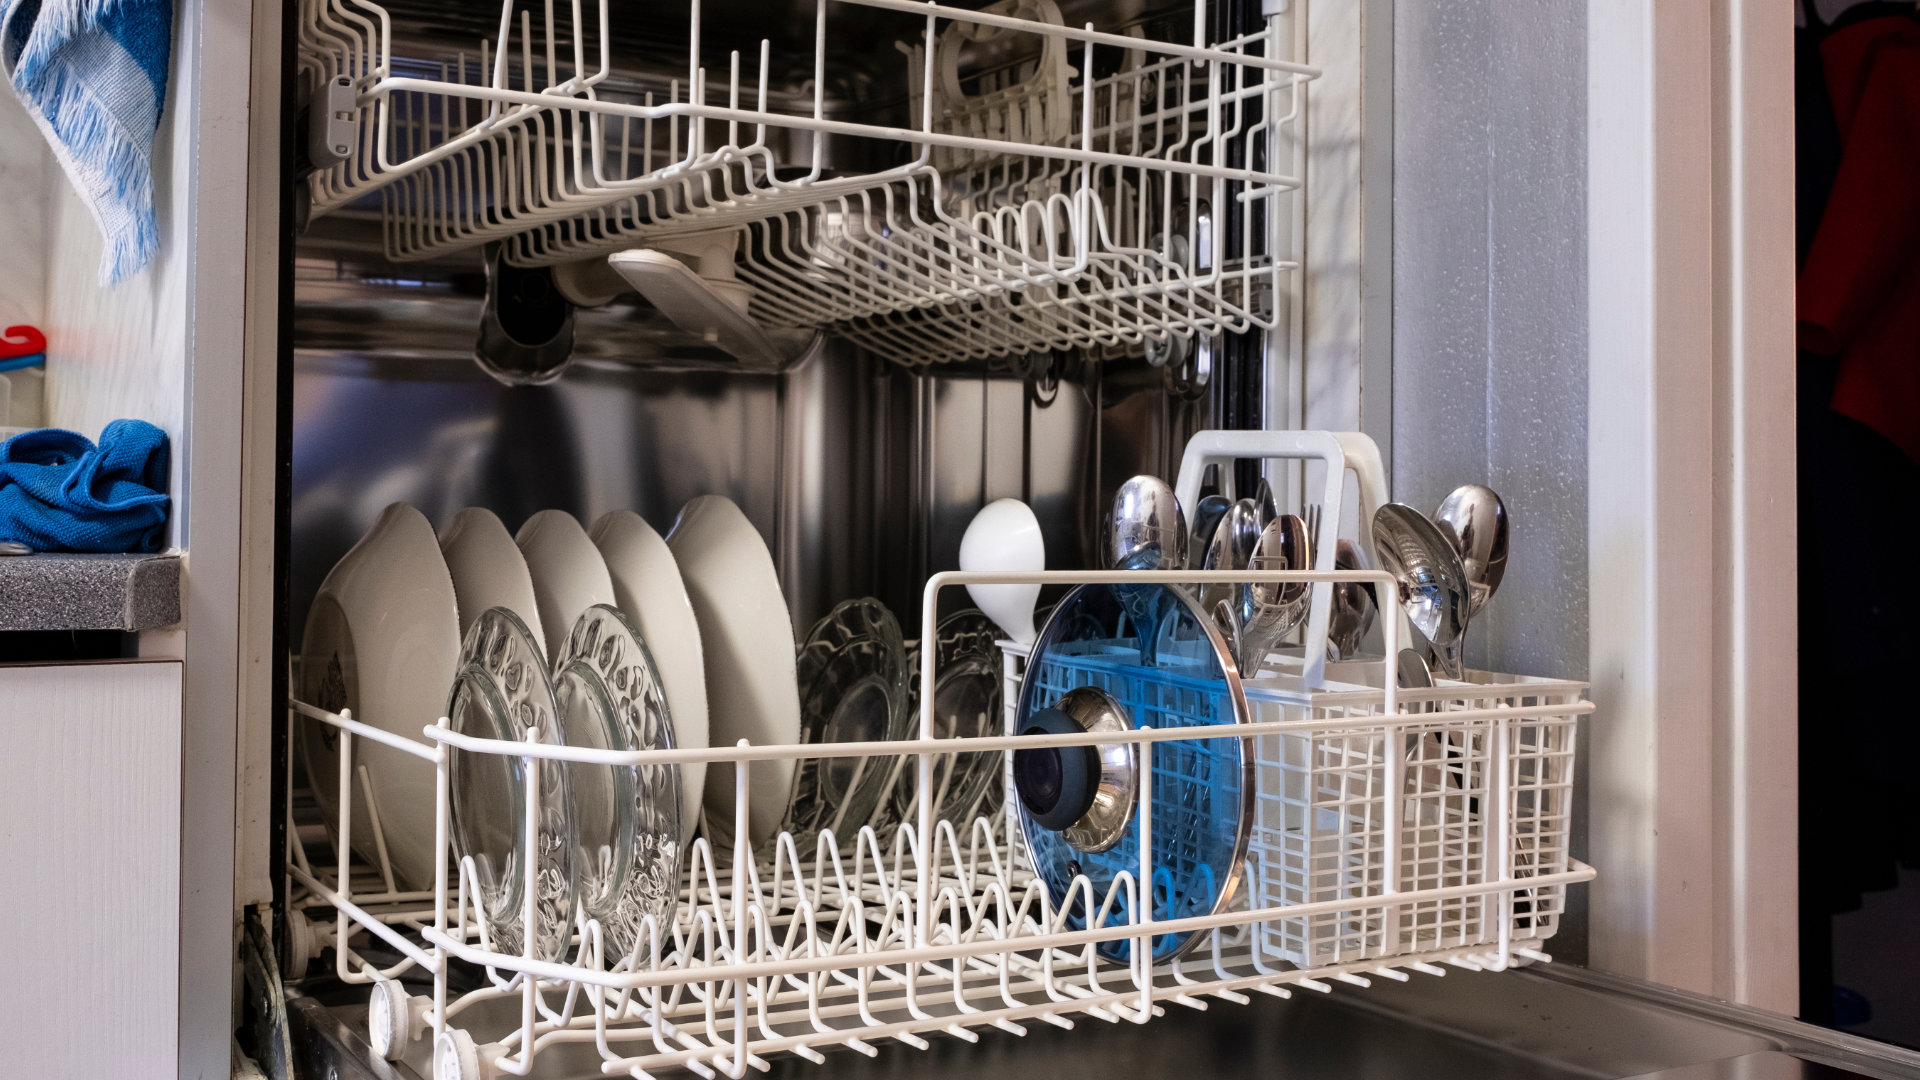 LG dishwasher racks